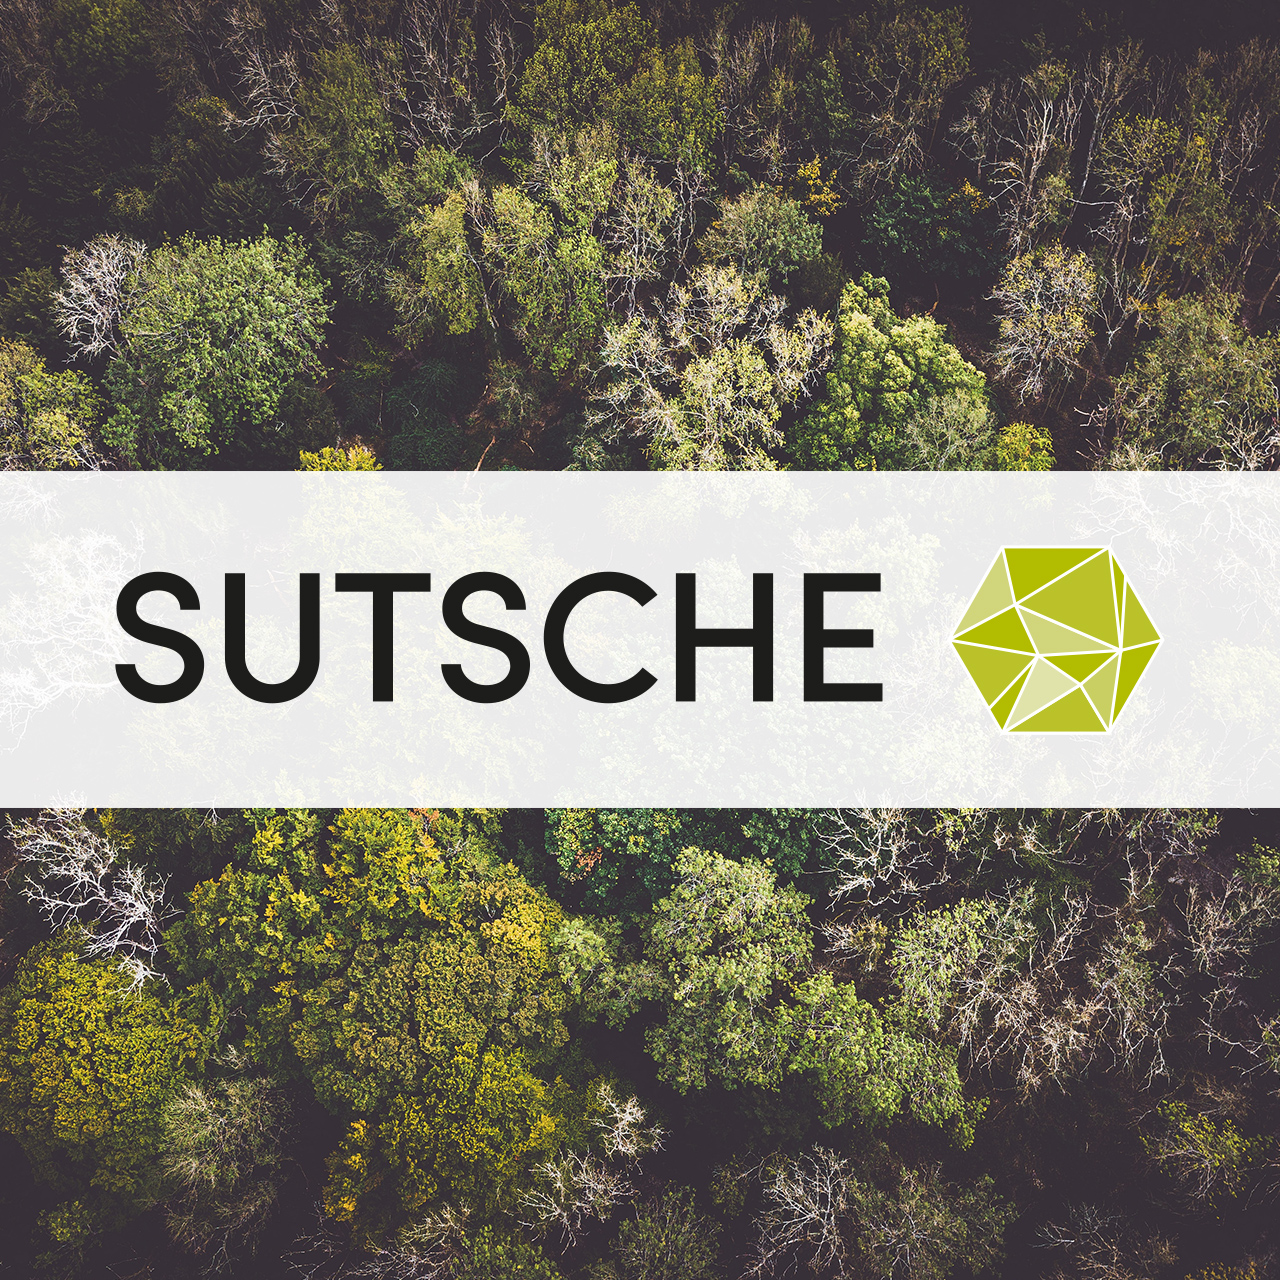 (c) Sutsche.com